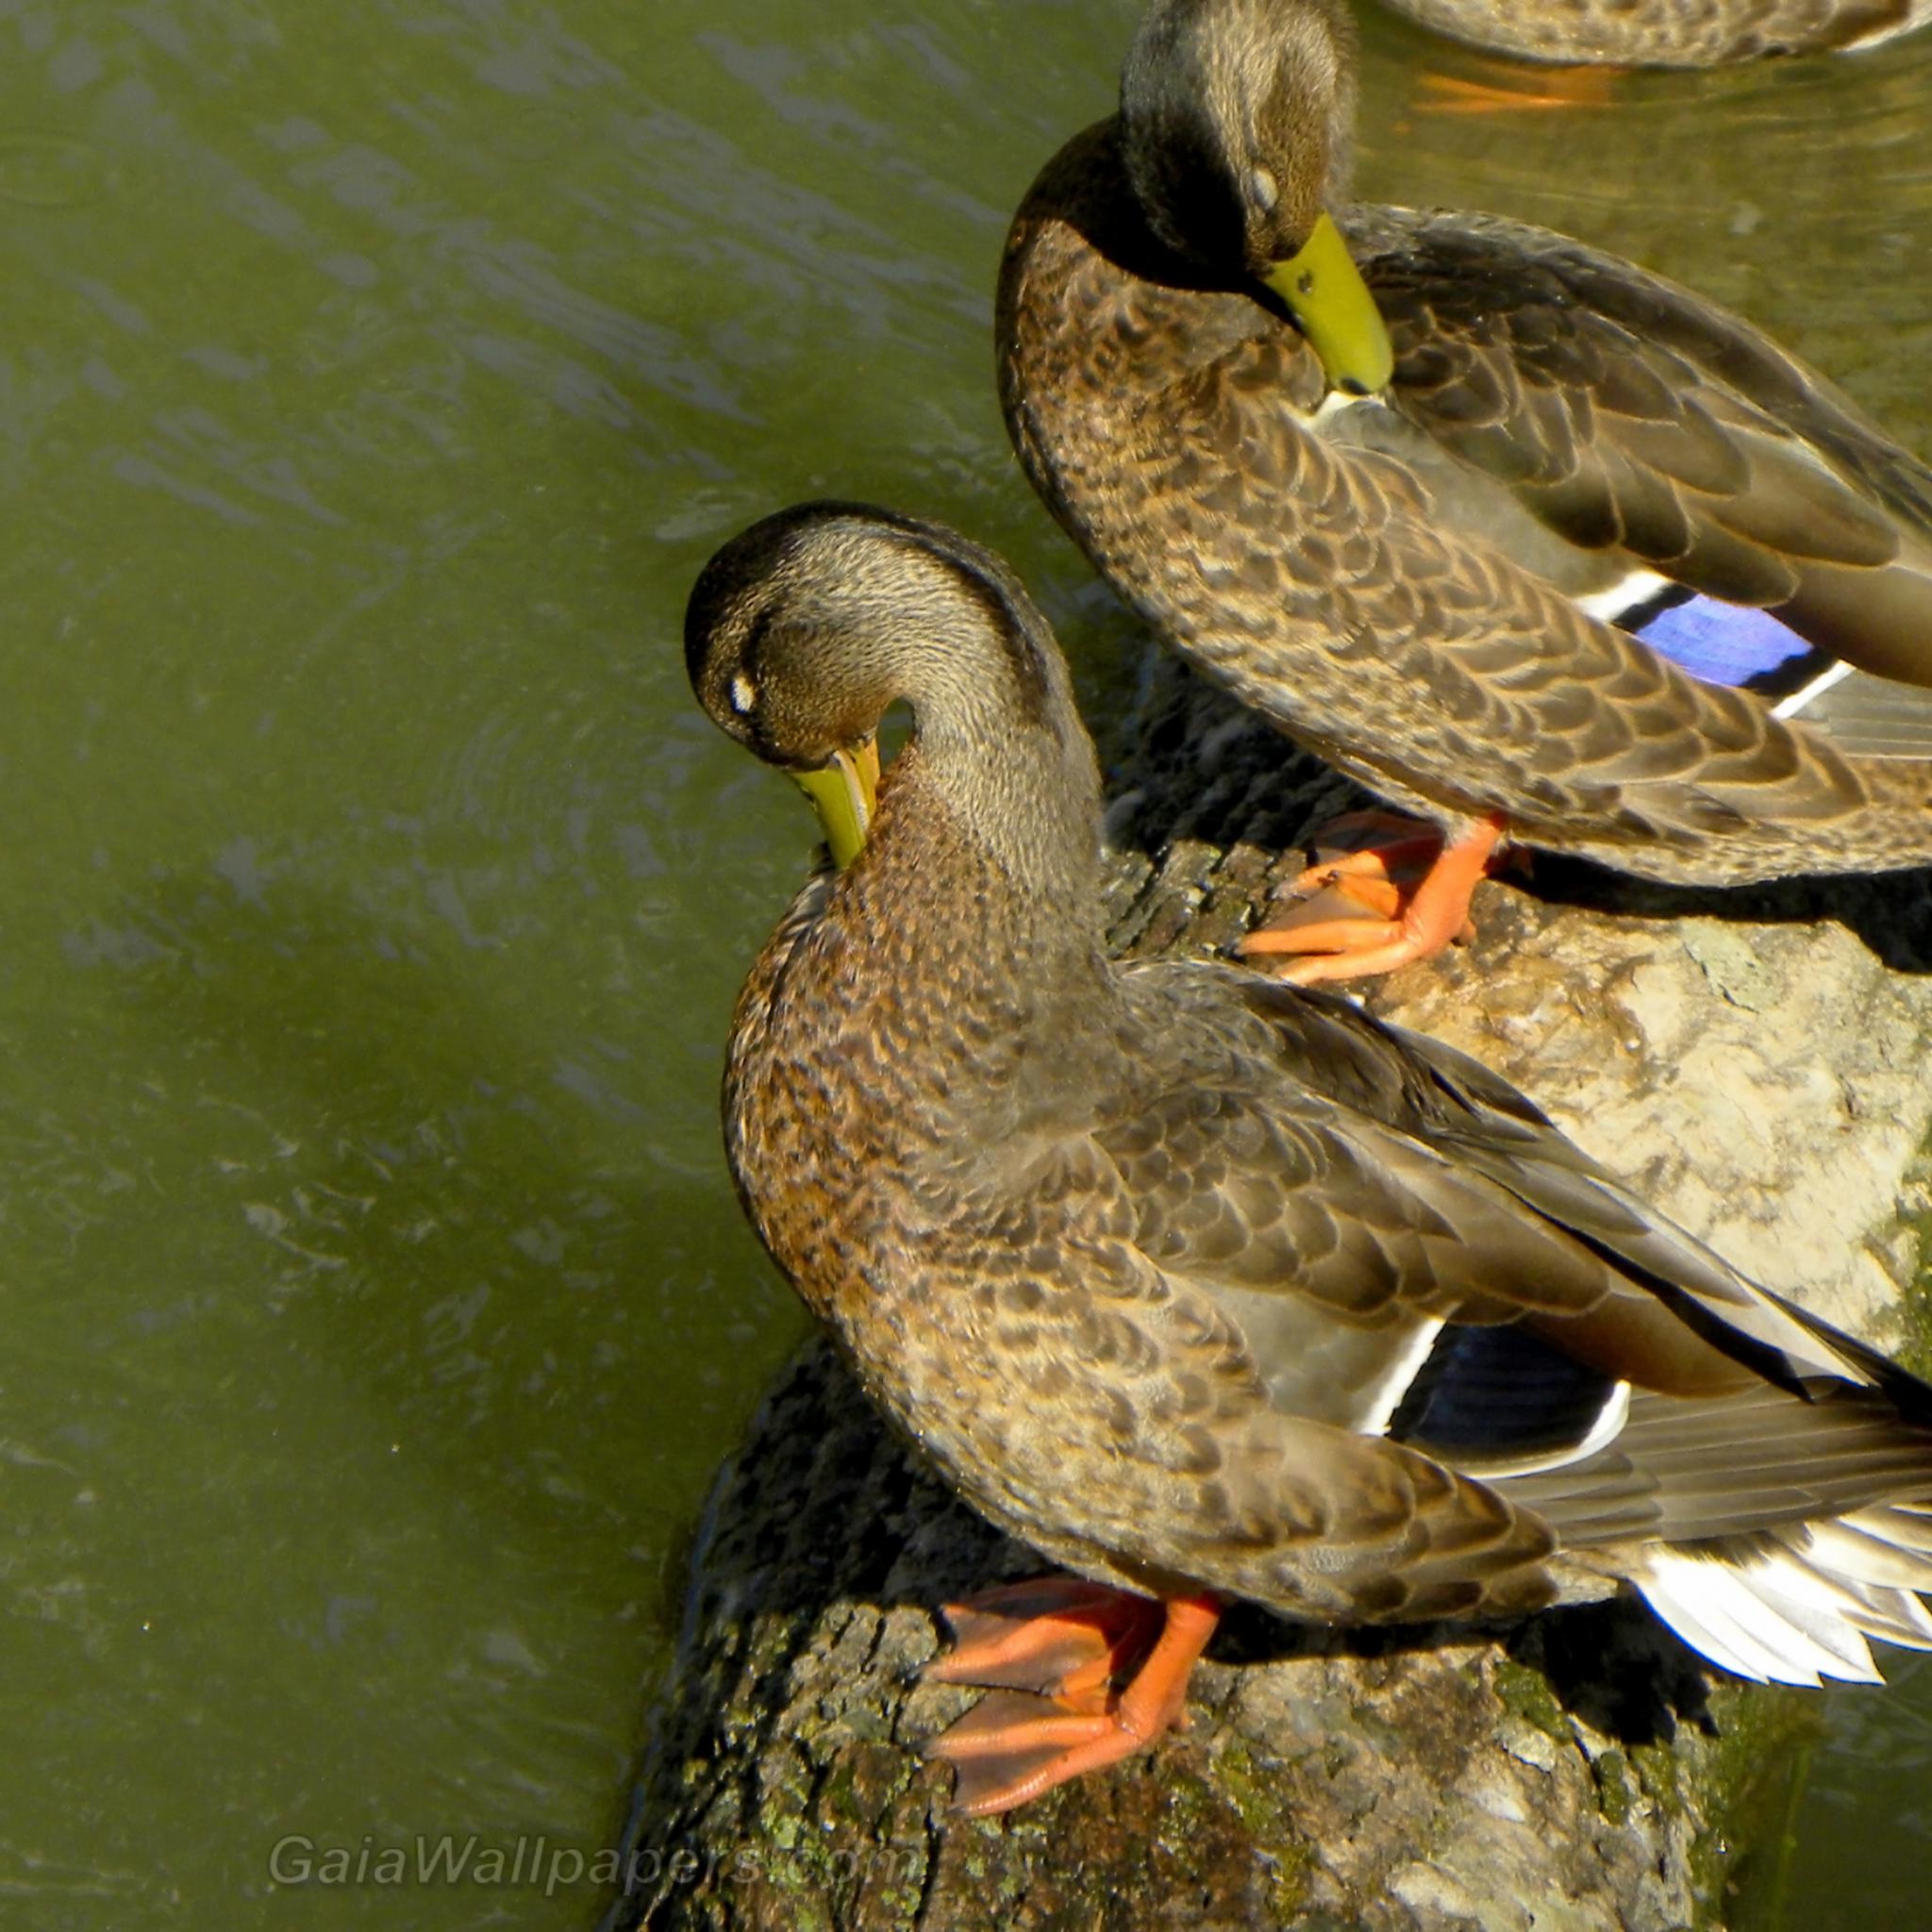 Ducks grooming on a tree trunk - Free desktop wallpapers